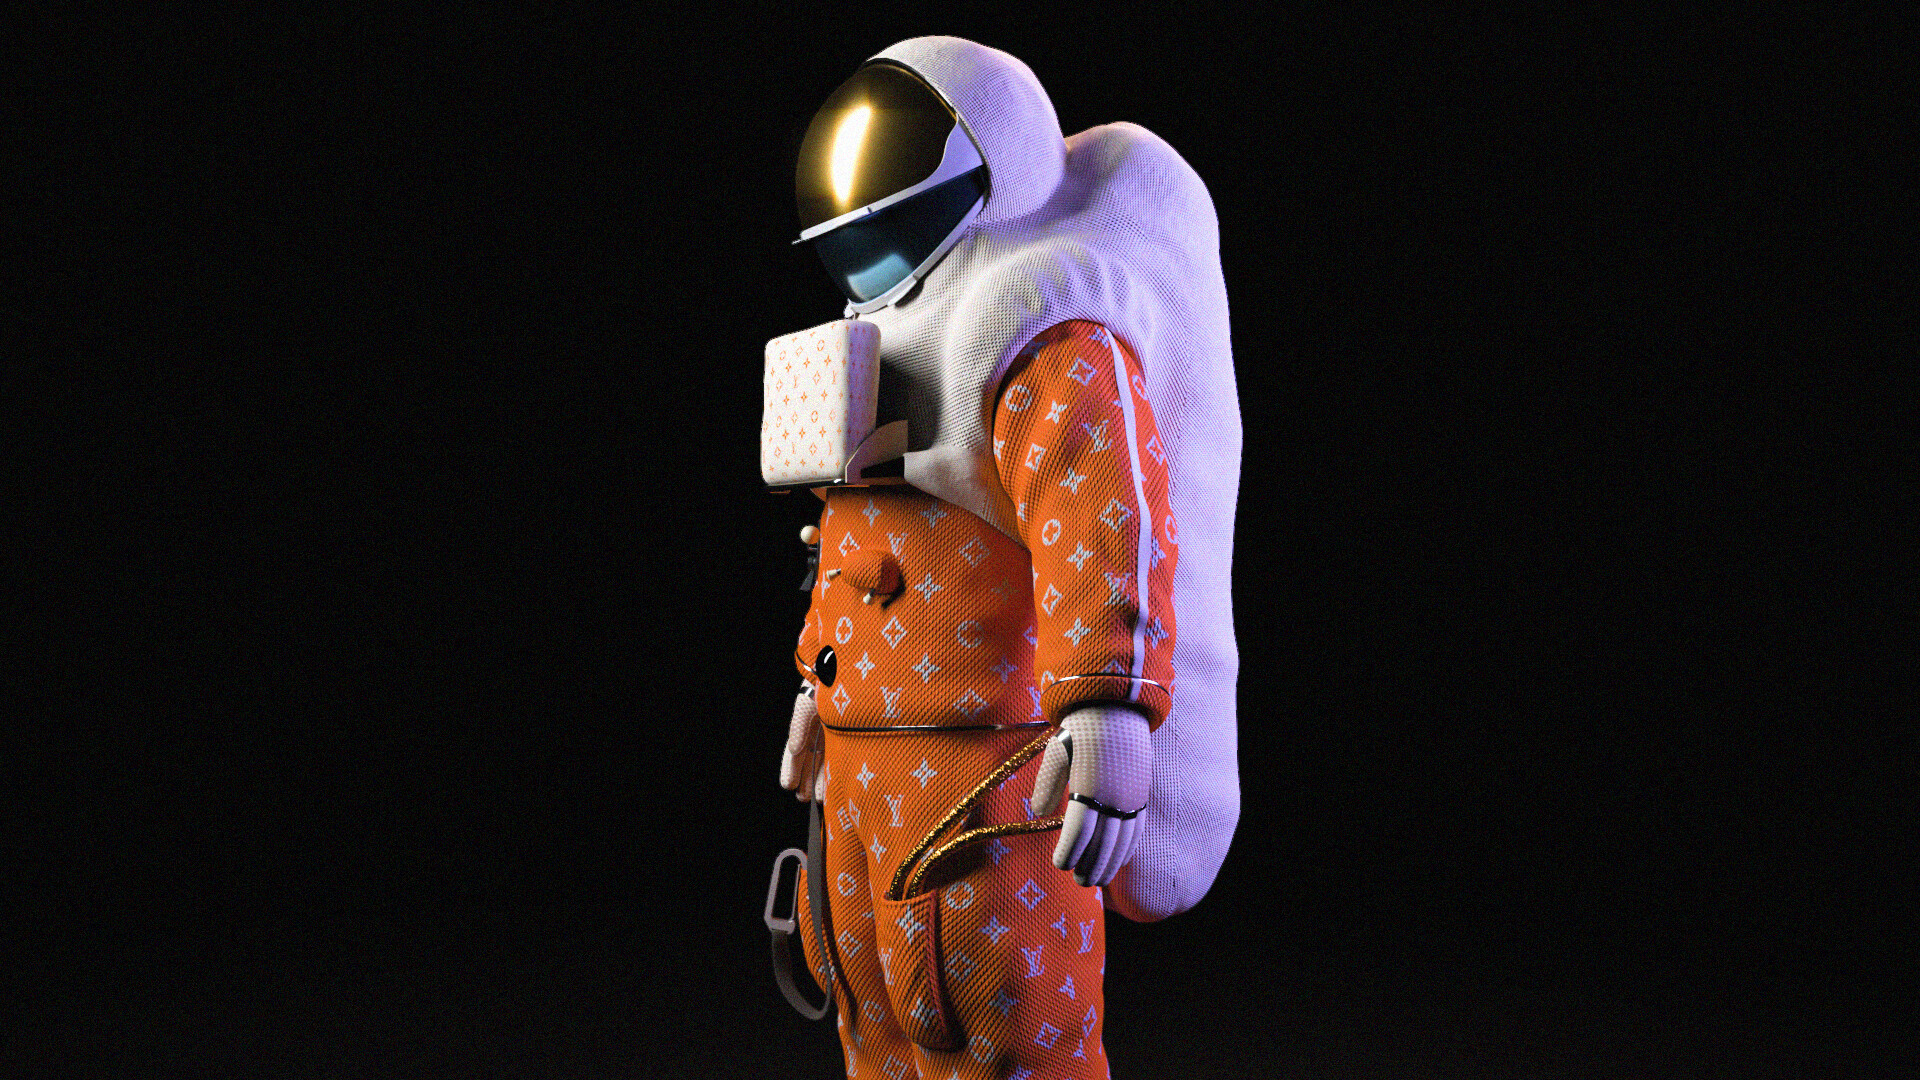 ArtStation - Robot in a Jacket - Louis Vuitton